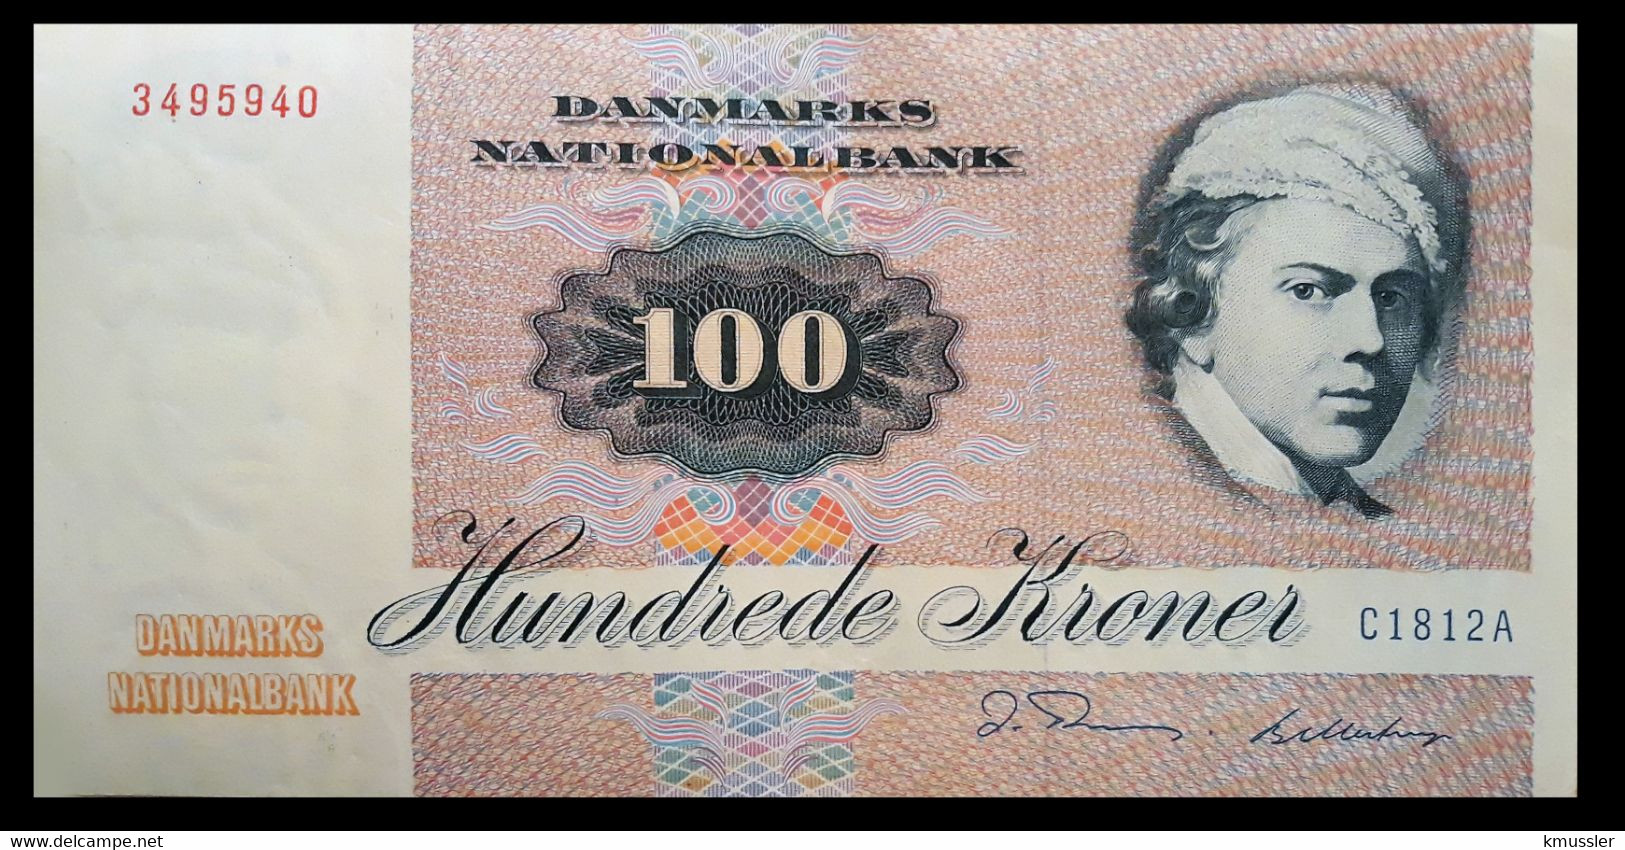 # # # Banknote Dänemark (Denmark) 100 Kroner 1981 # # # - Denmark